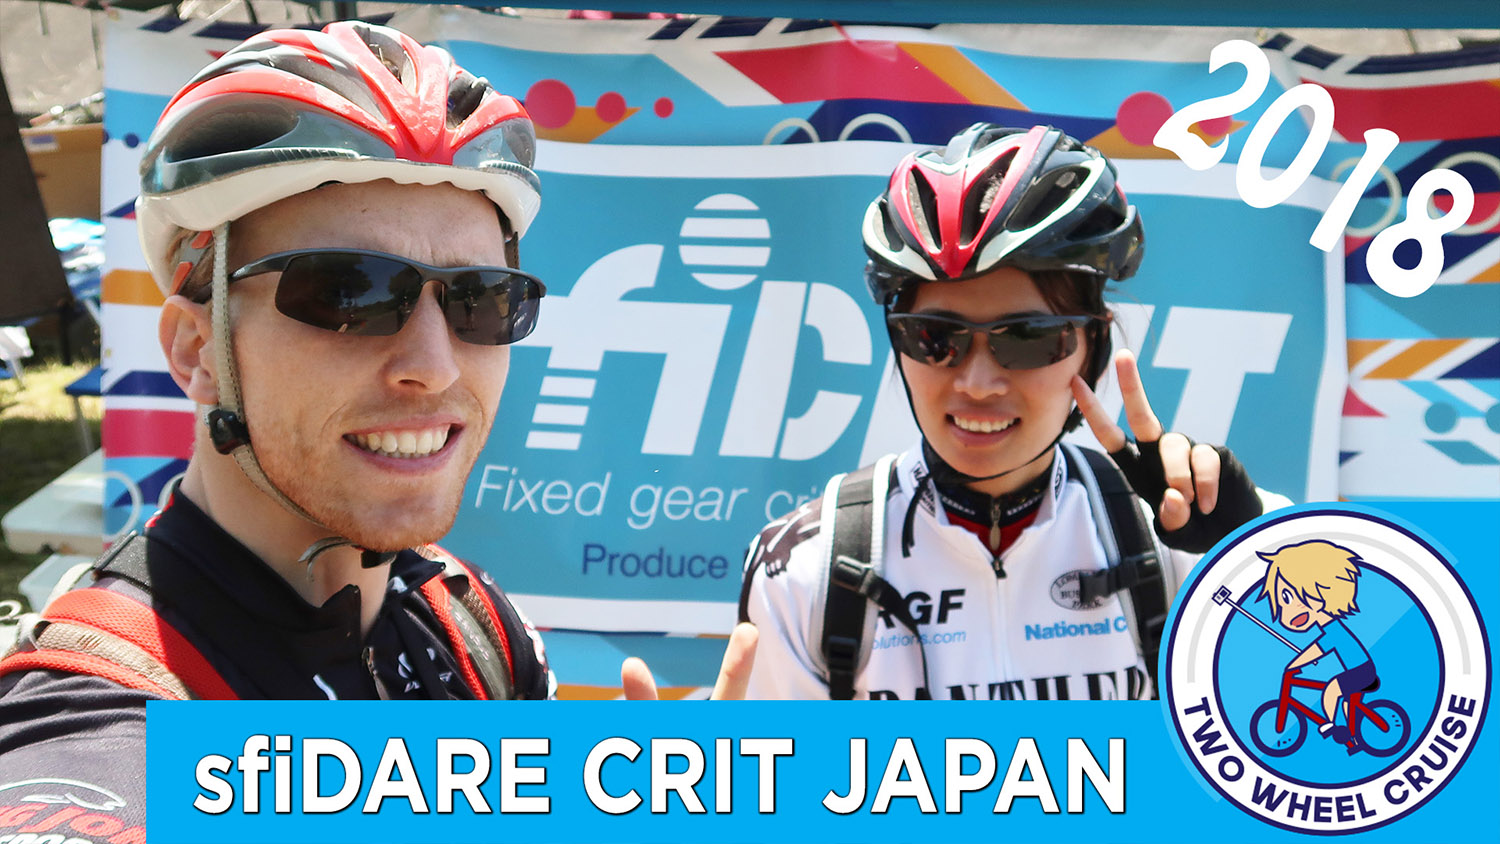 sfidare crit japan fixed gear race 2018